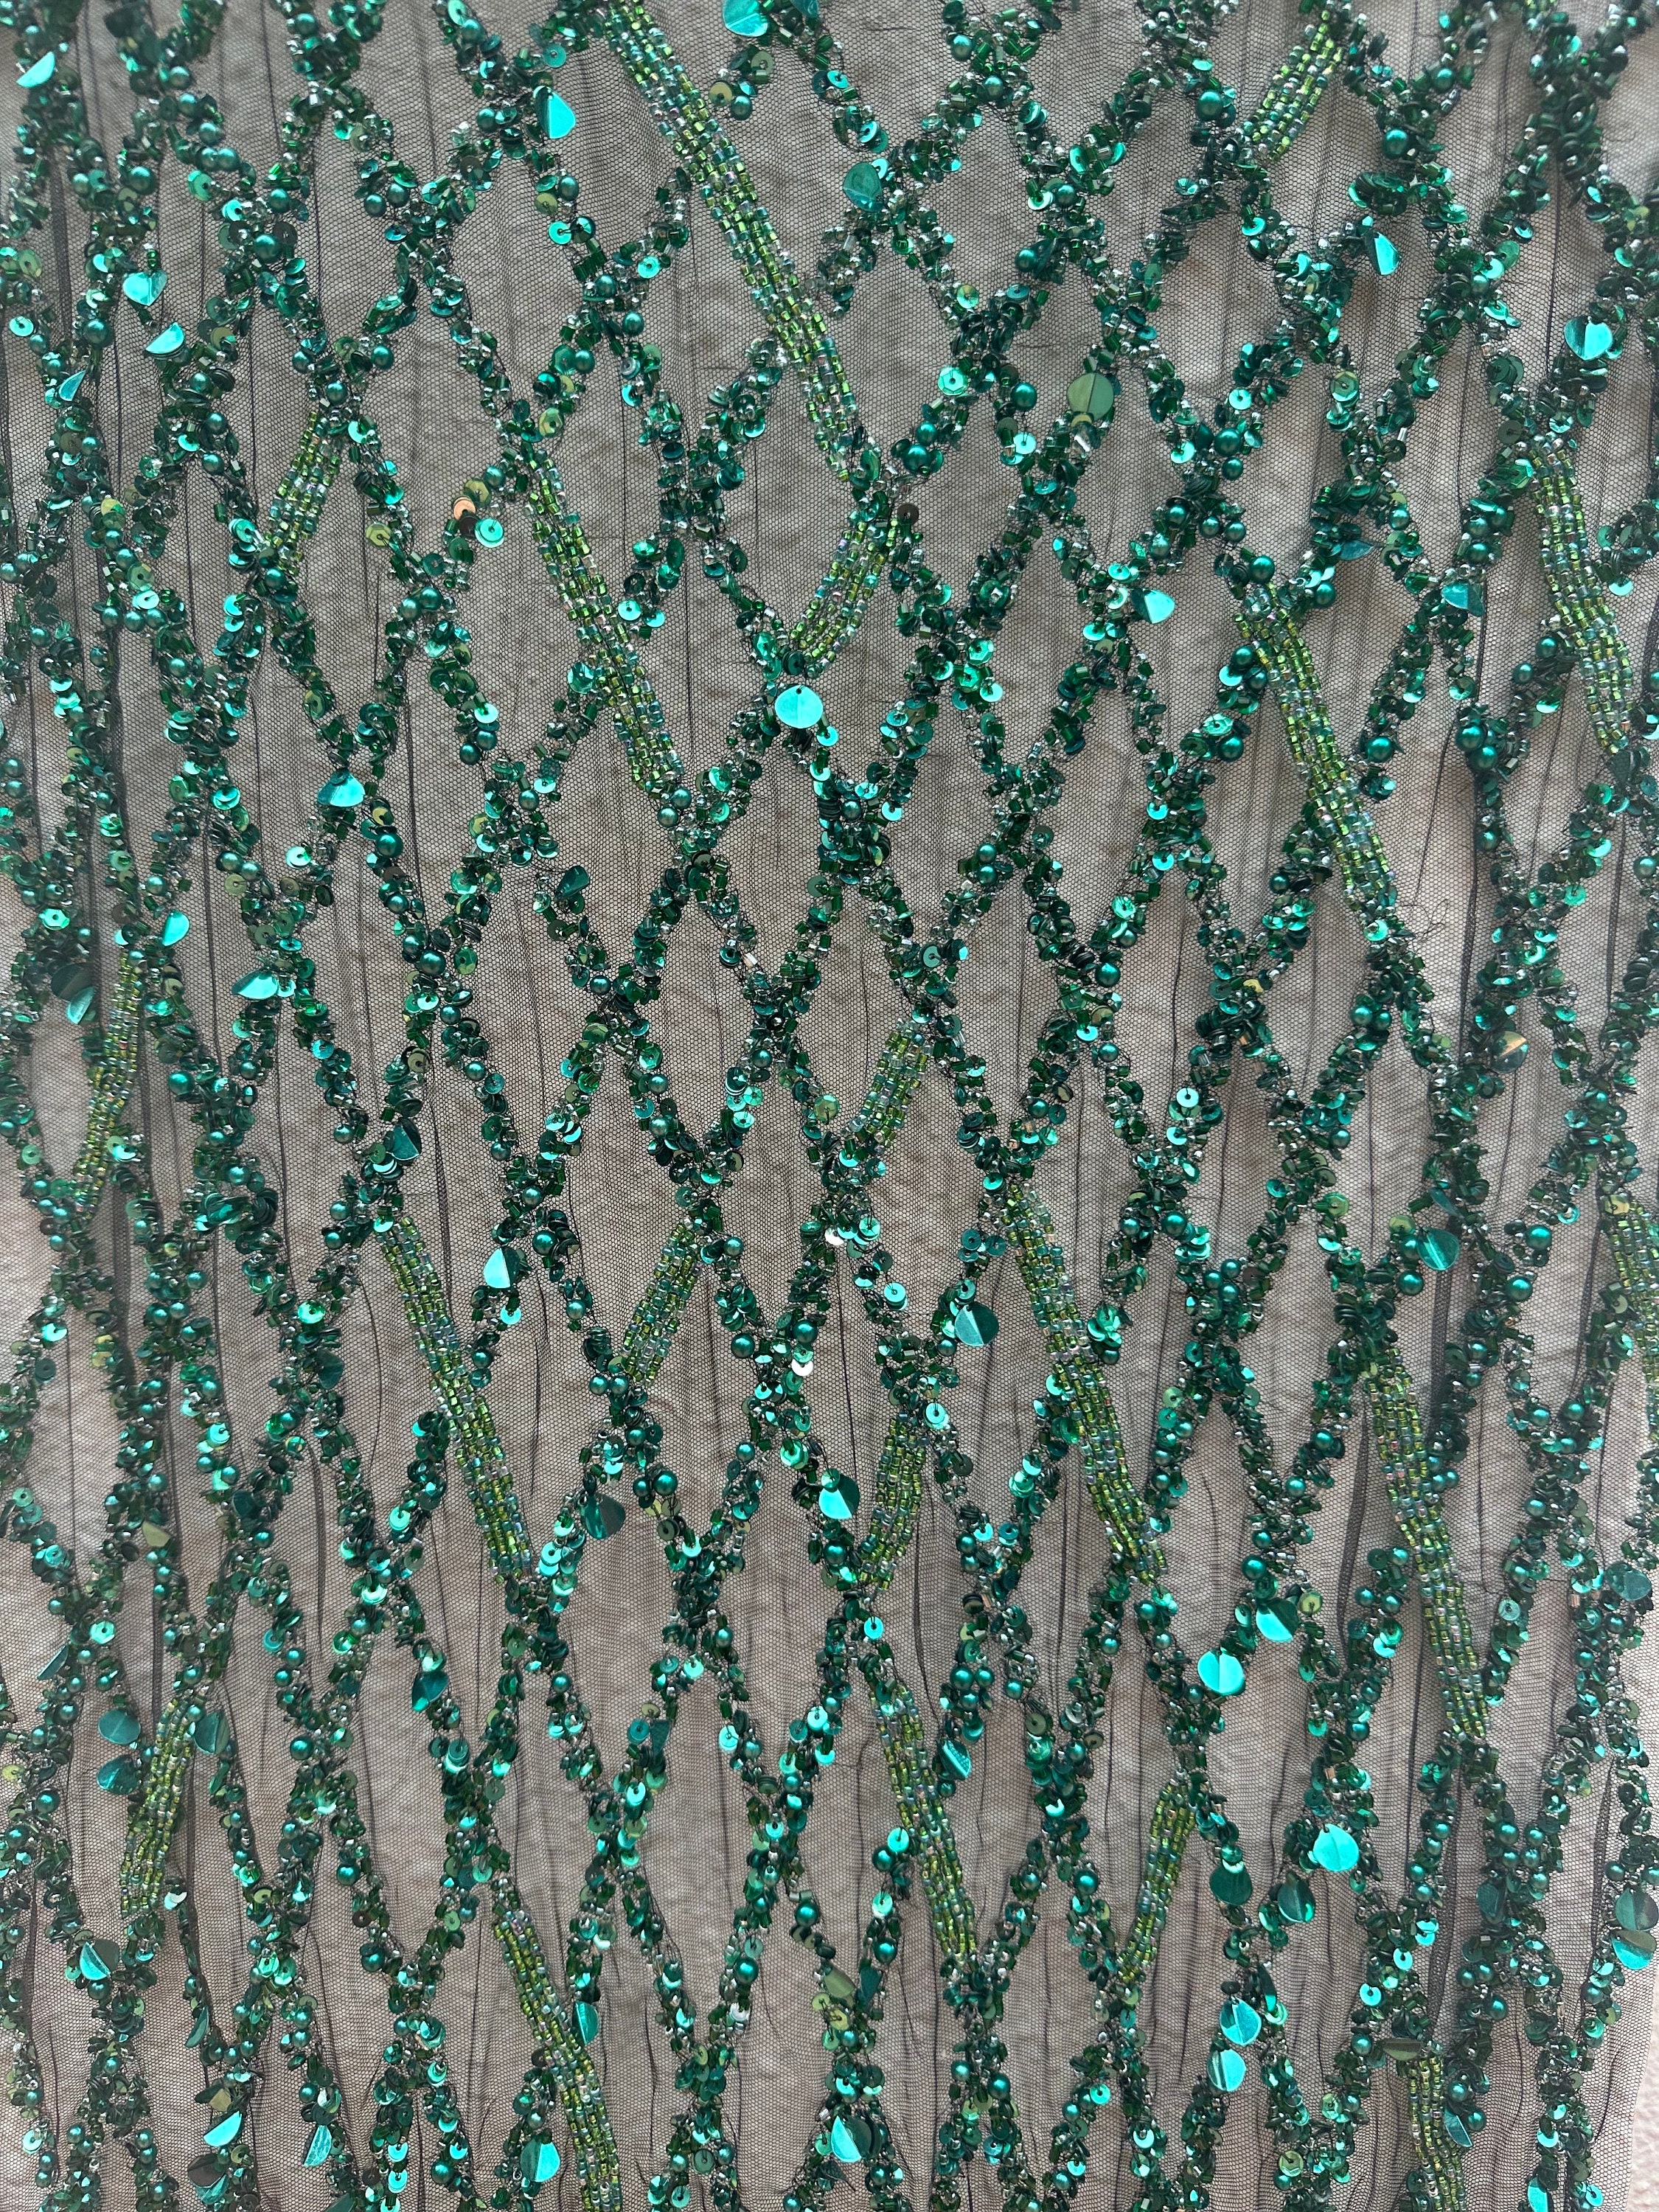 Green corded lace fabric scallop edge both ends rich dark emerald